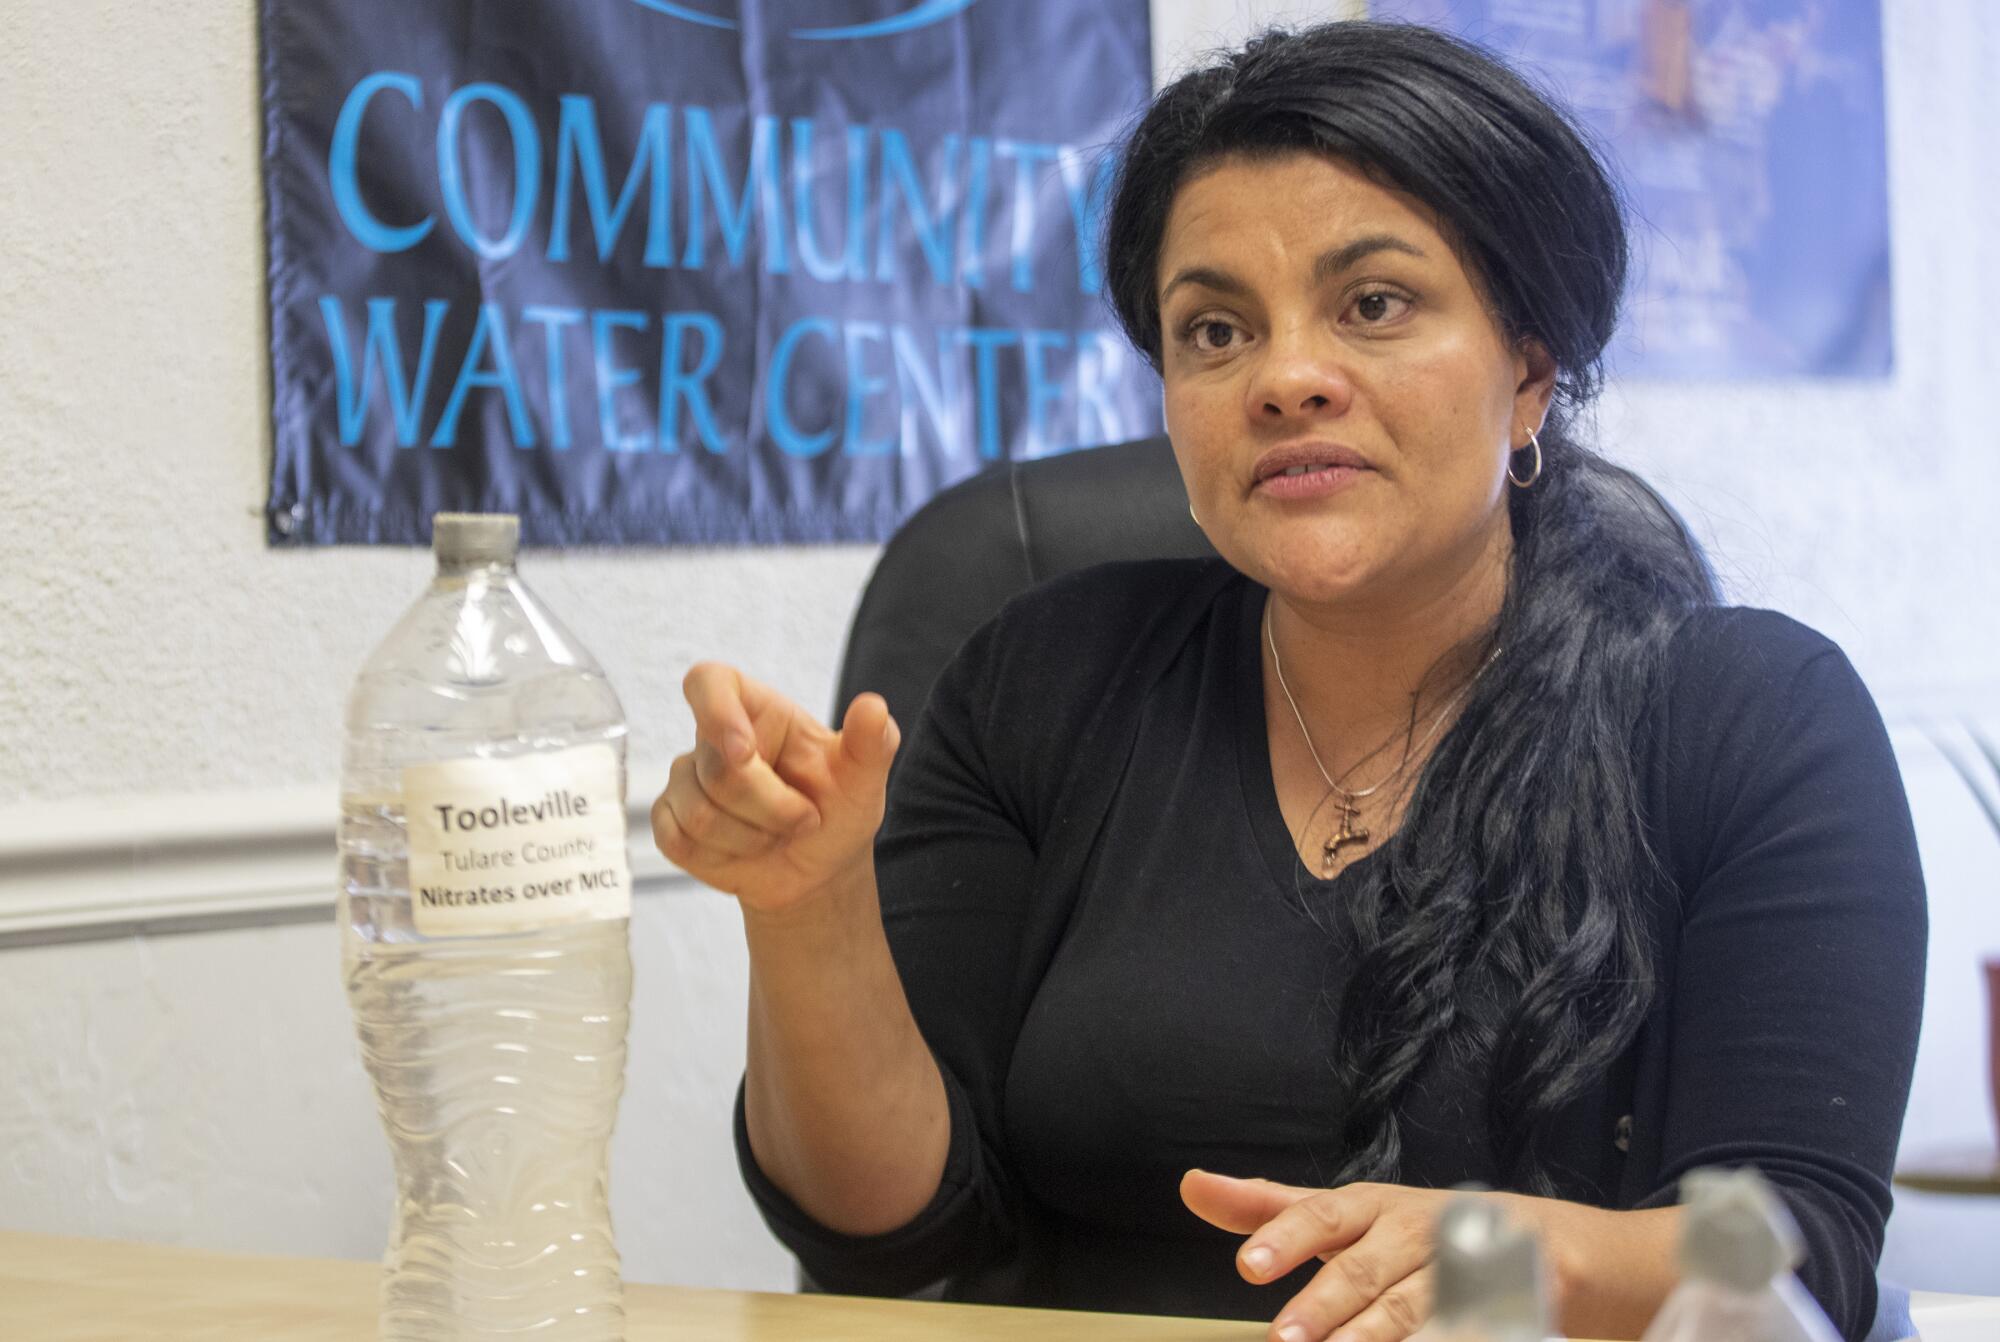 Susana de Anda, director of the Community Water Center in Visalia, gestures while talking.